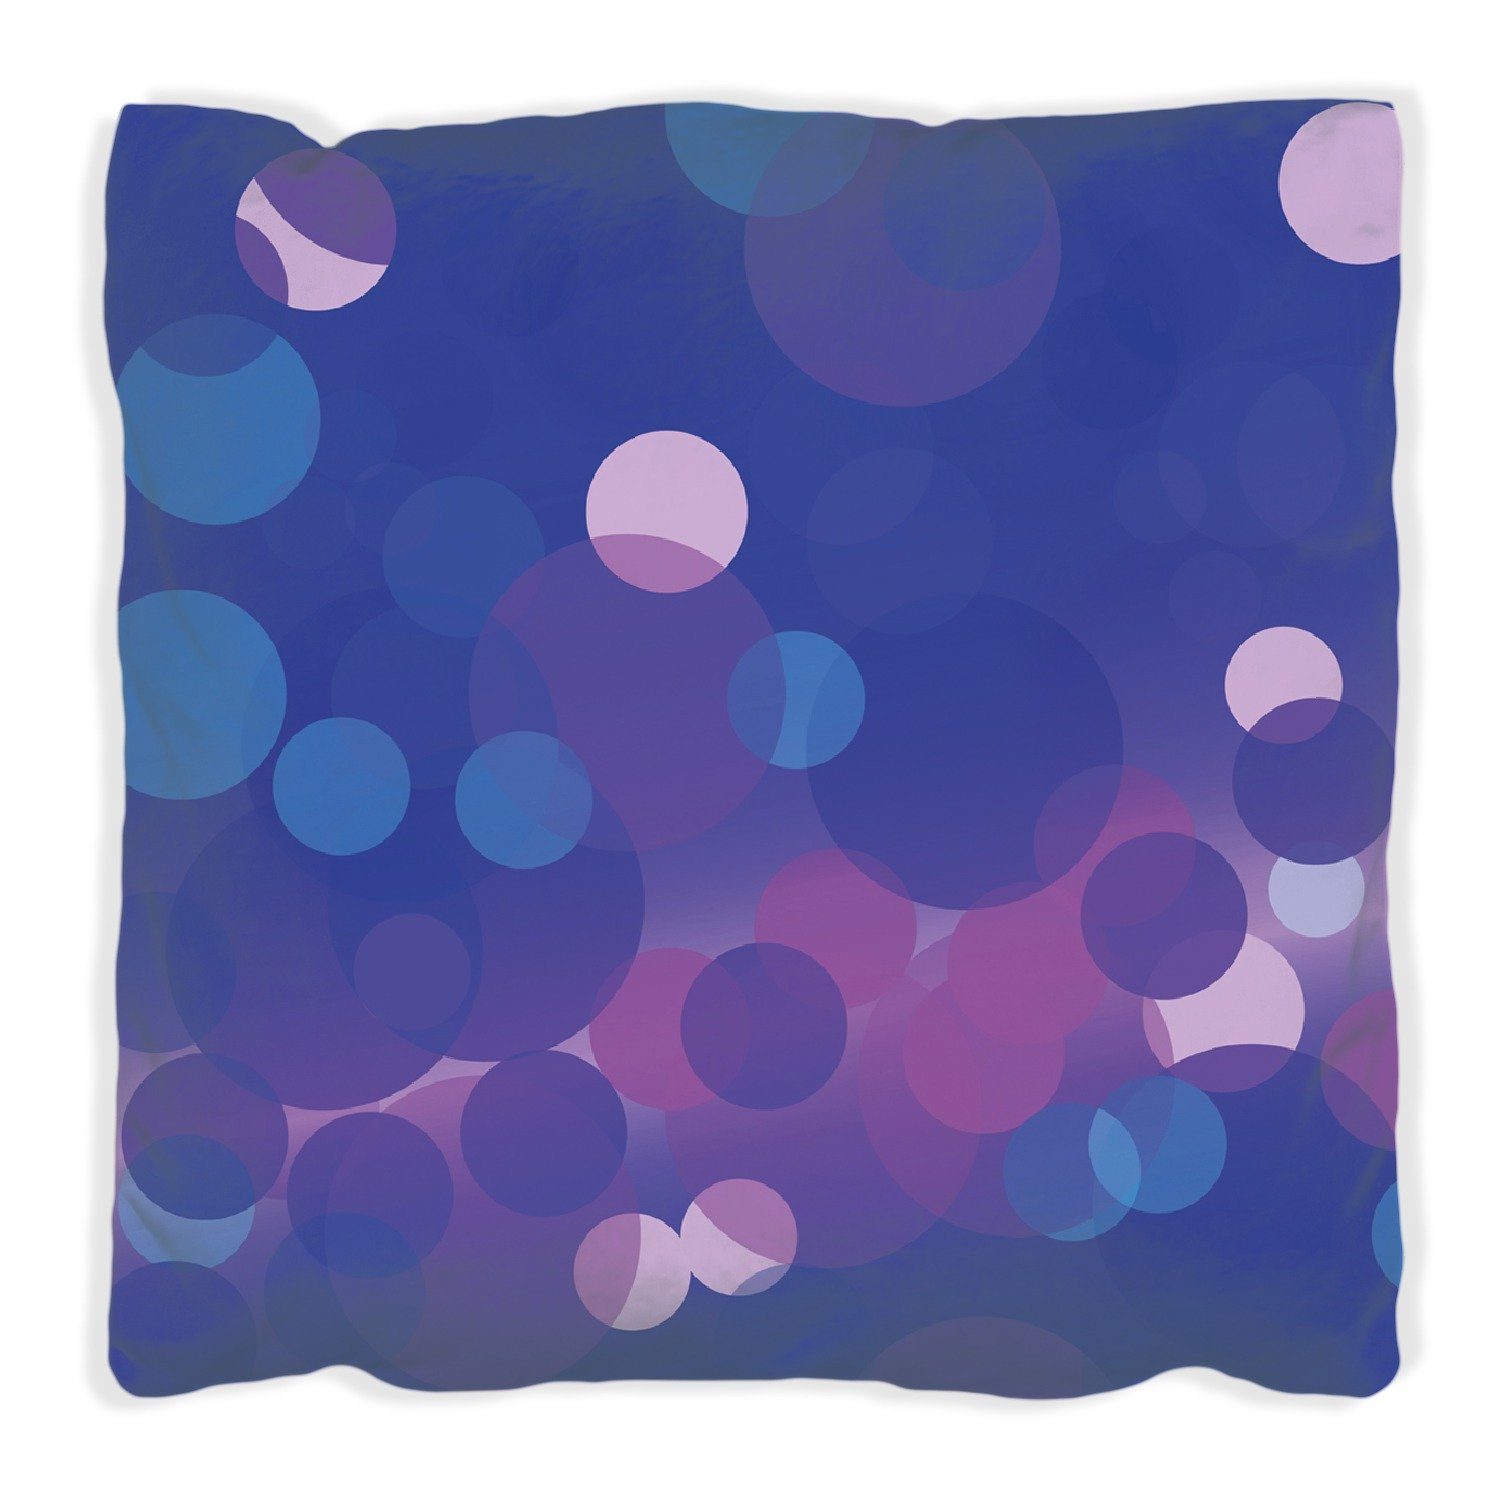 Wallario Dekokissen Blaue Kreise mit pink - harmonisches Muster, handgenäht